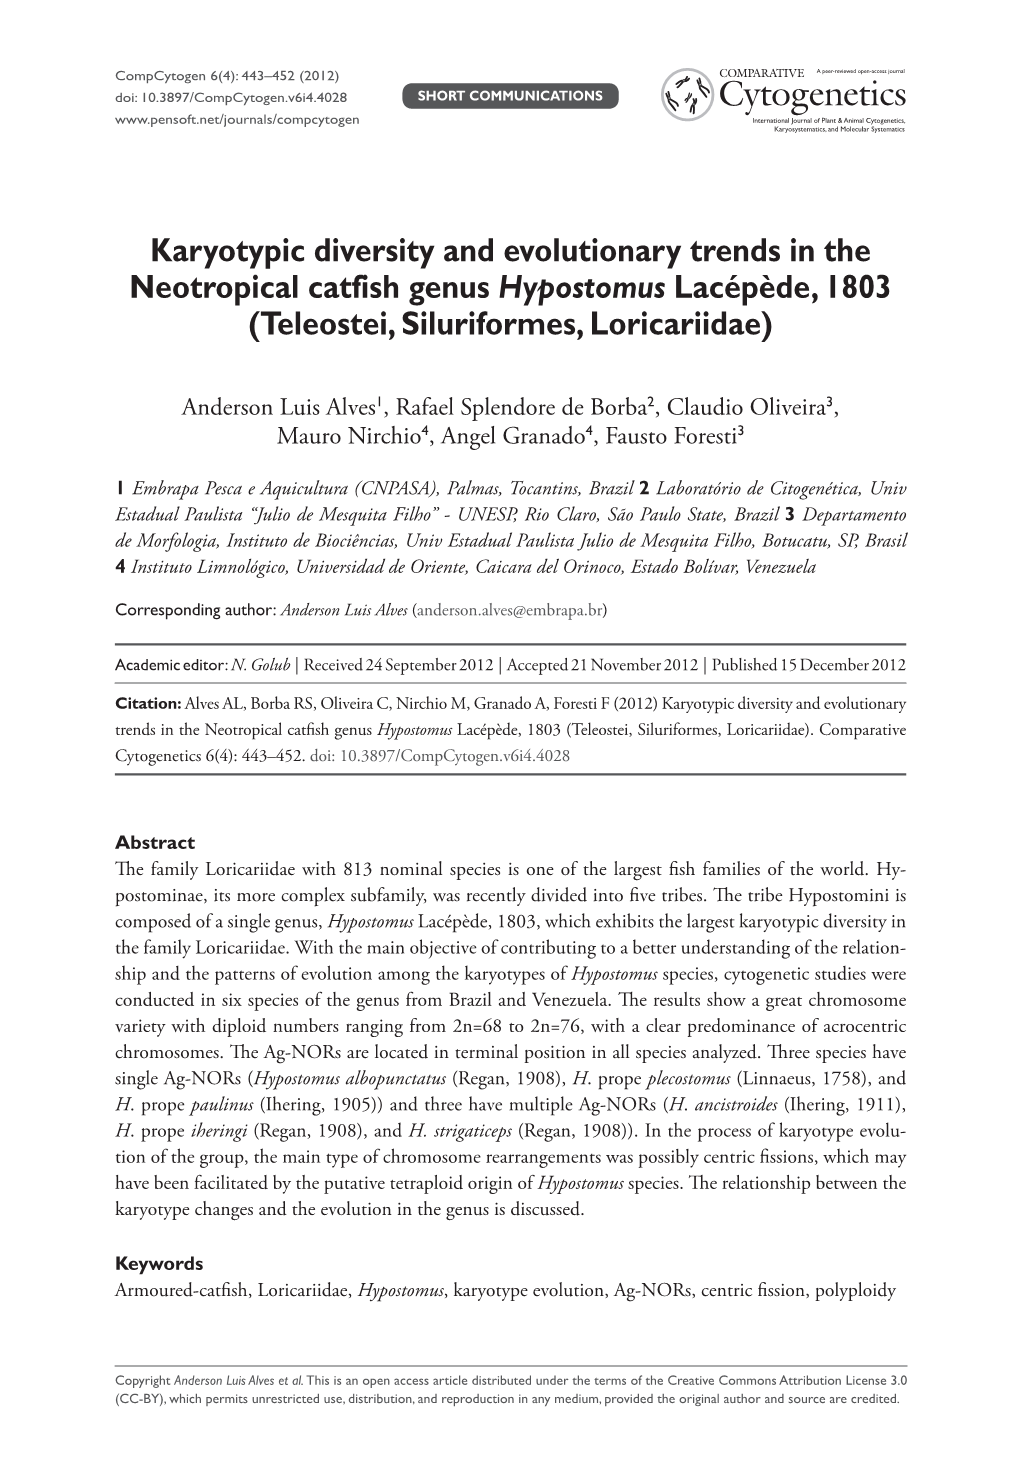 Karyotypic Diversity and Evolutionary Trends in the Neotropical Catfish Genus Hypostomus Lacépède, 1803 (Teleostei, Siluriformes, Loricariidae)